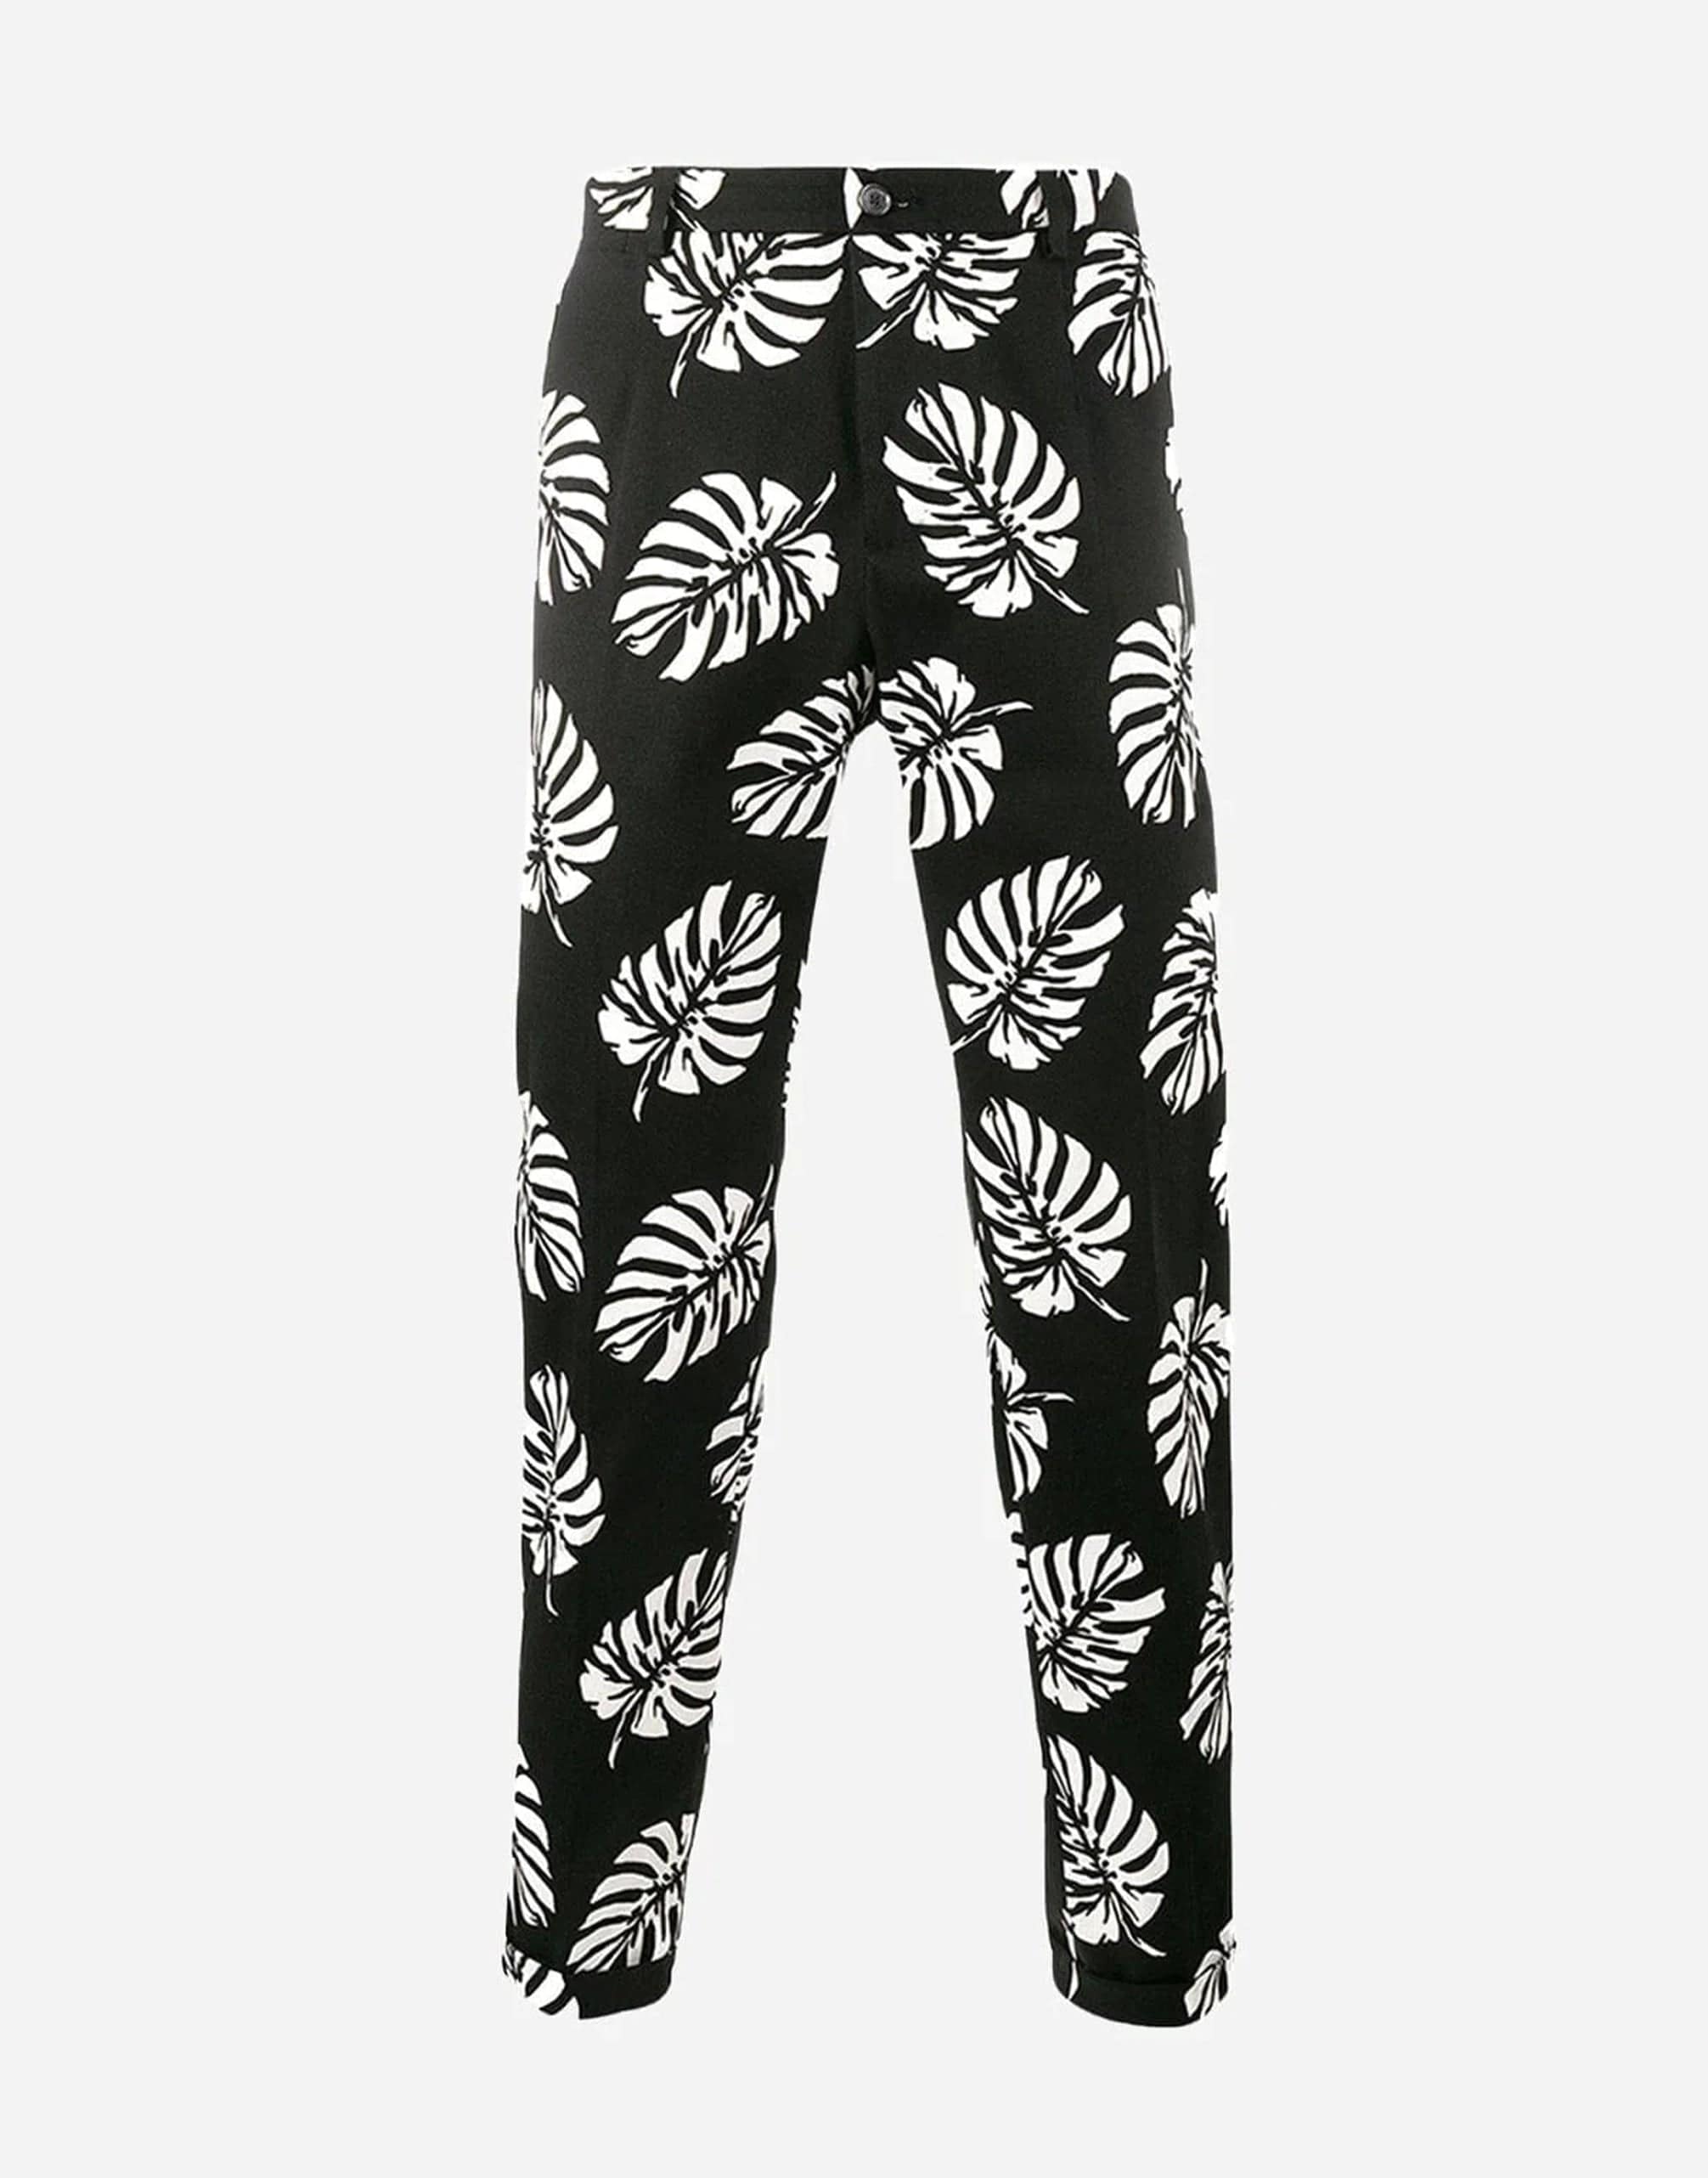 Dolce & Gabbana Leaf Print Trousers